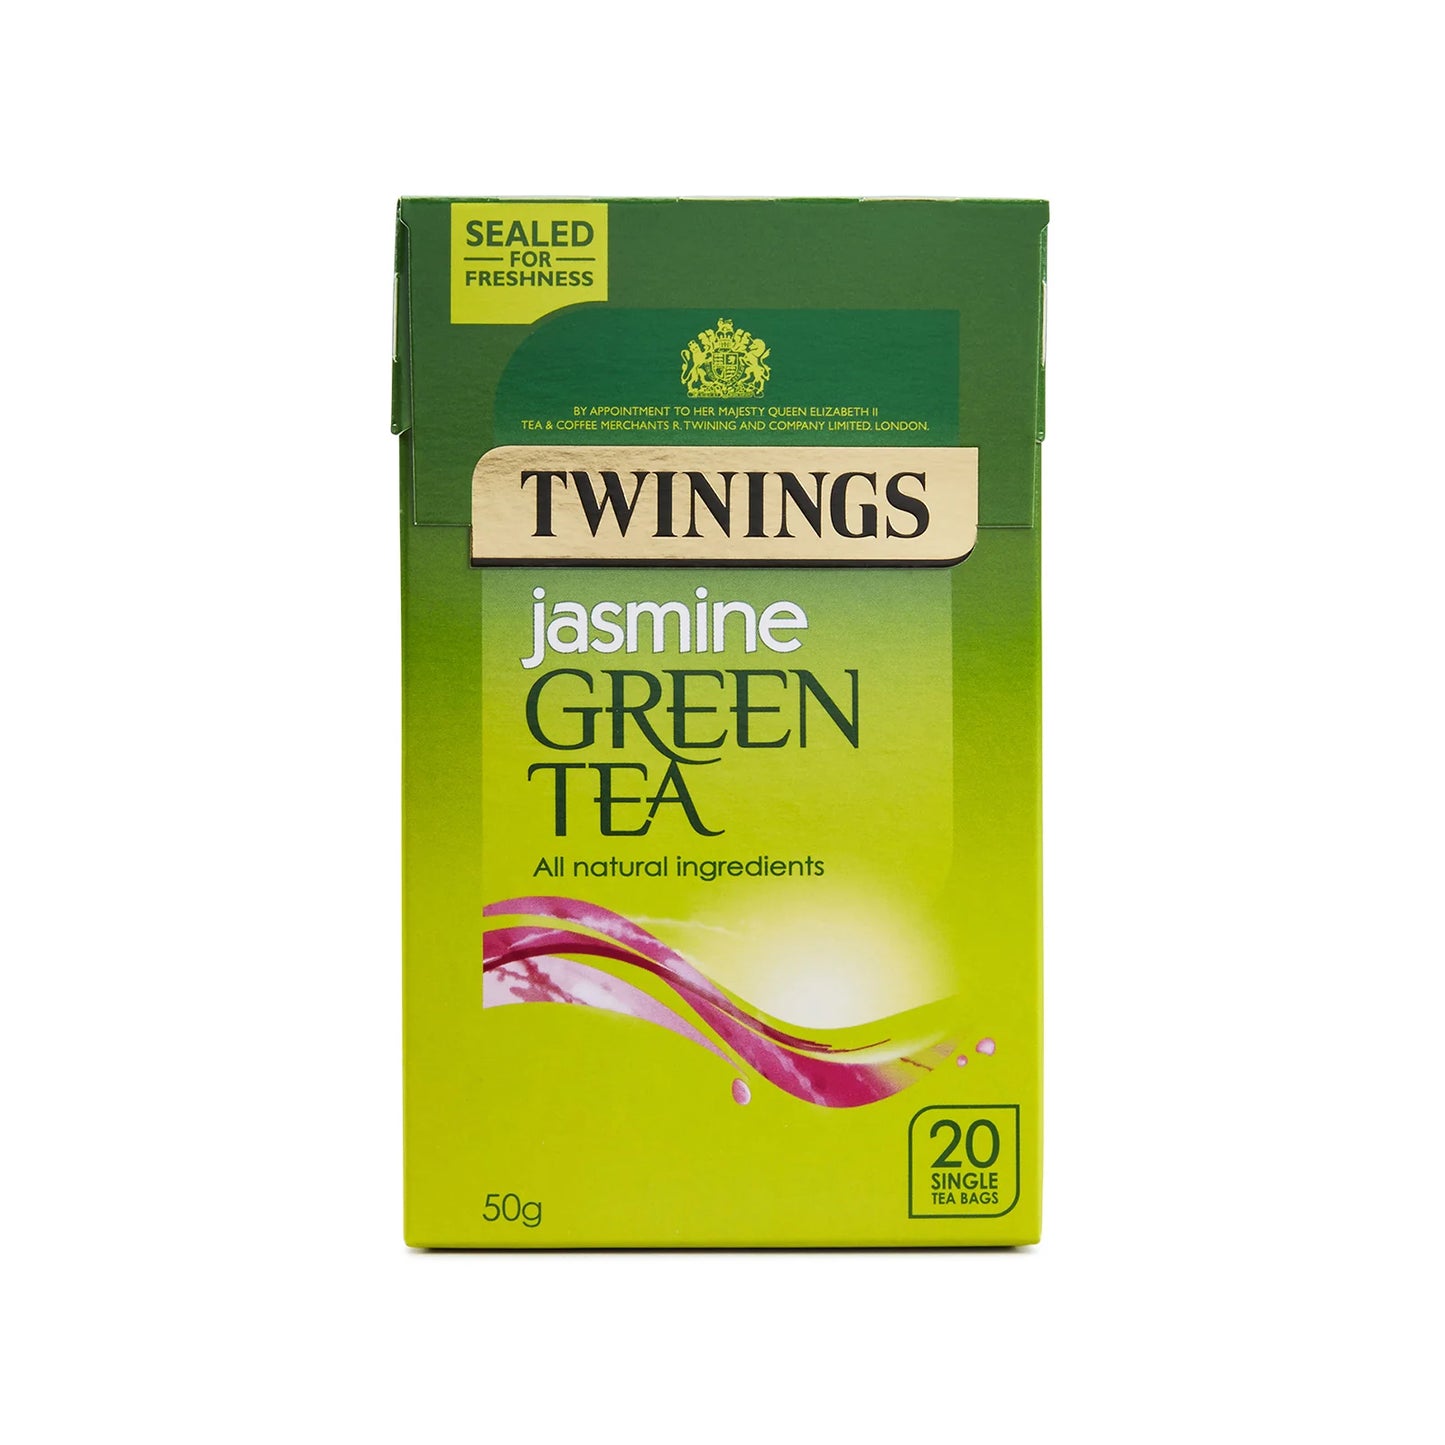 TWININGS JASMINE GREEN TEA